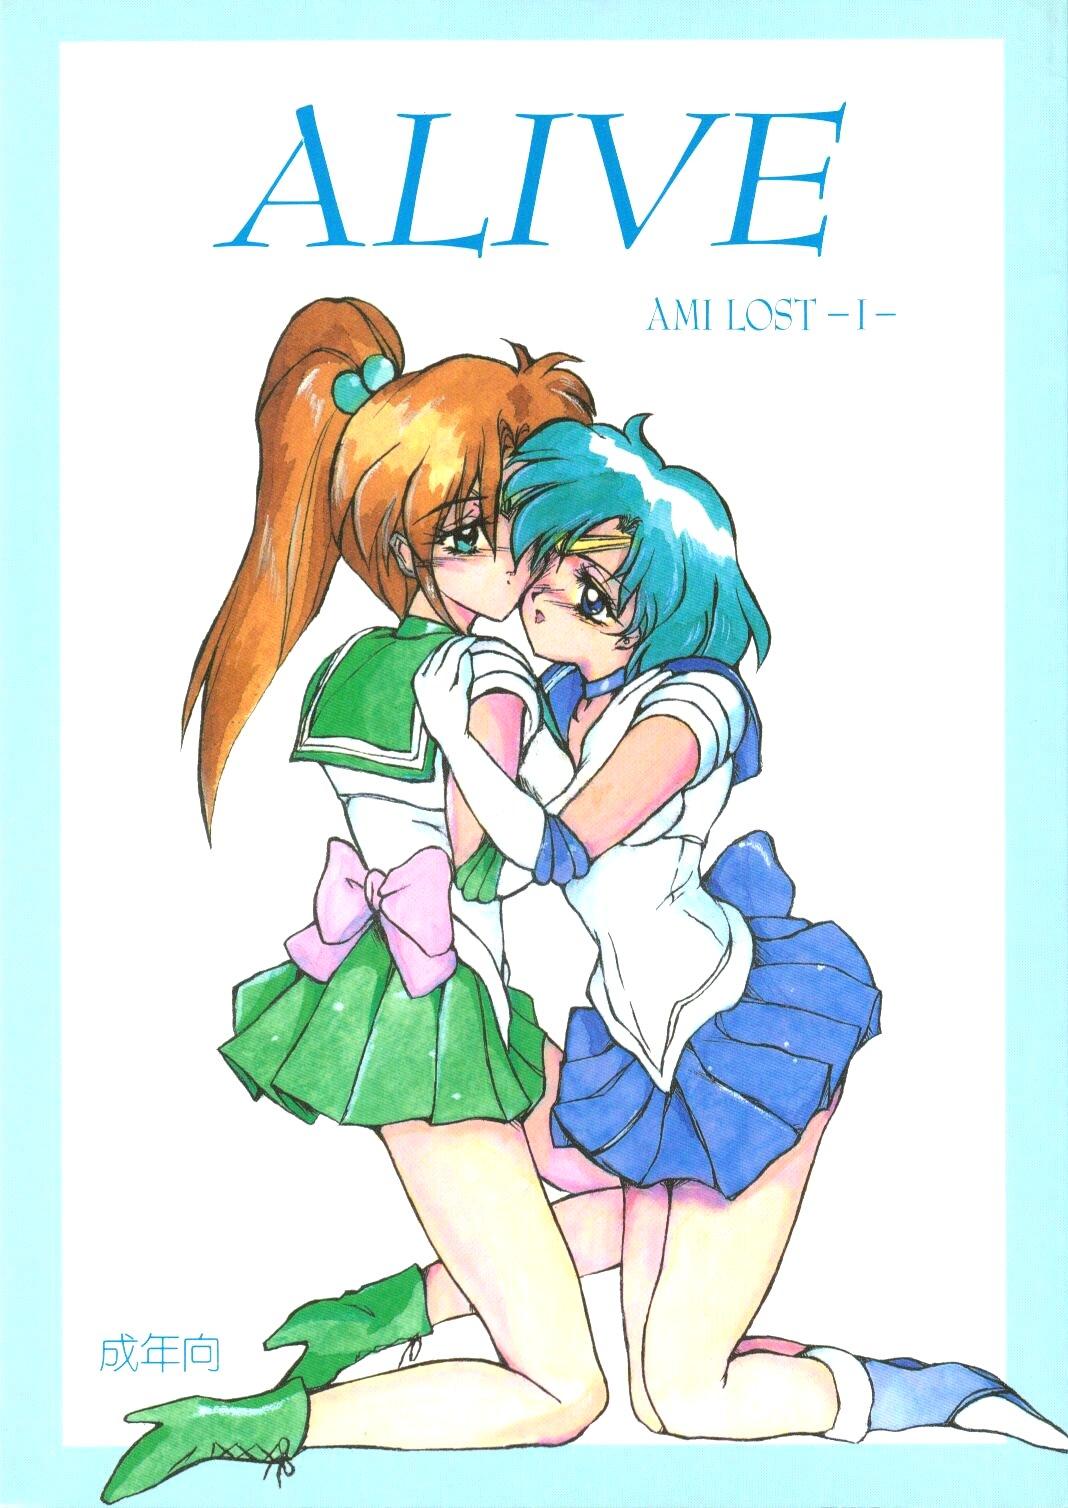 Nurumassage ALIVE AMI LOST - Sailor moon Ejaculation - Picture 1